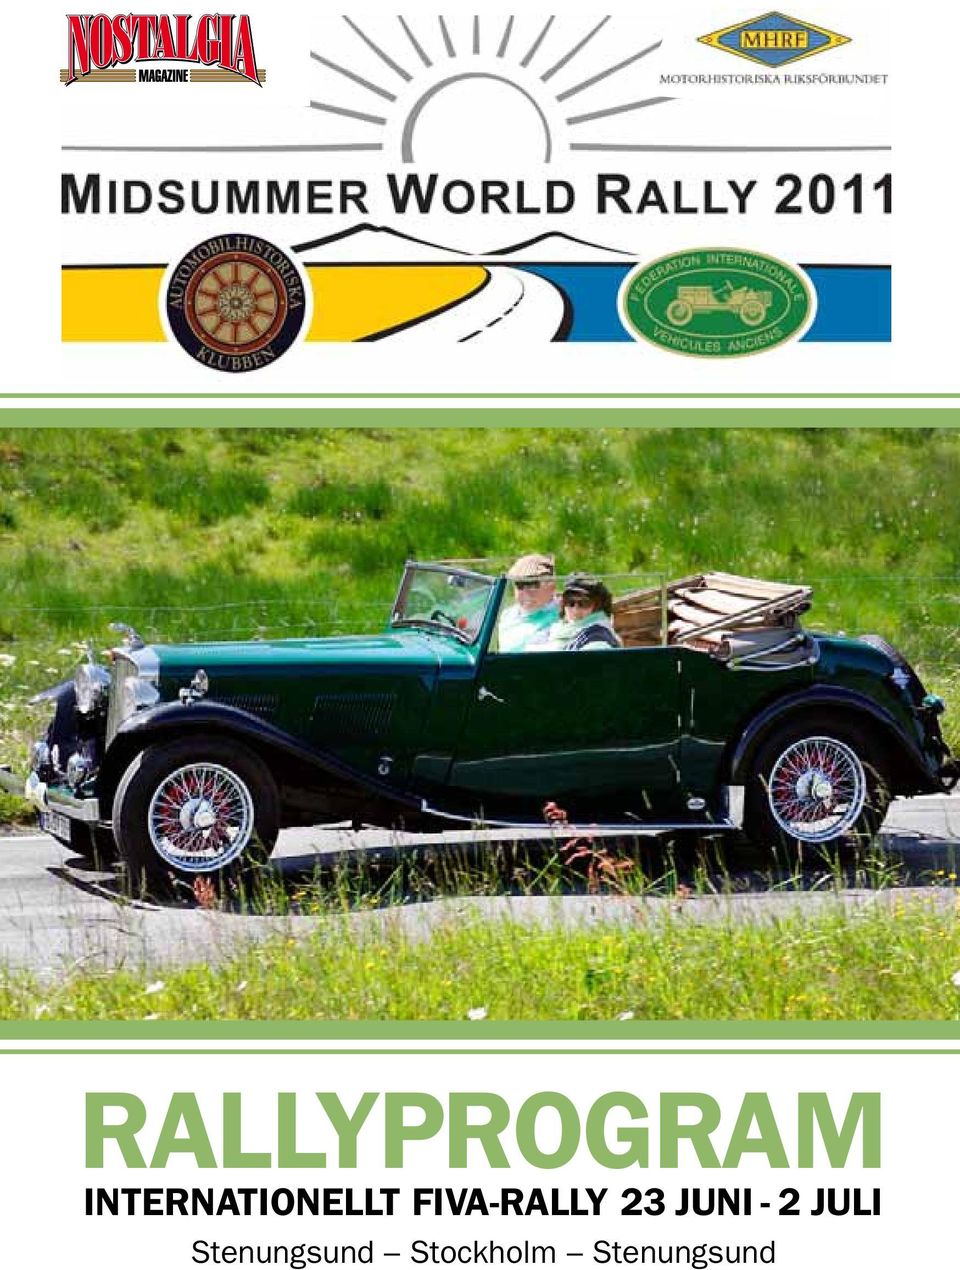 FIVA-Rally 23 juni - 2